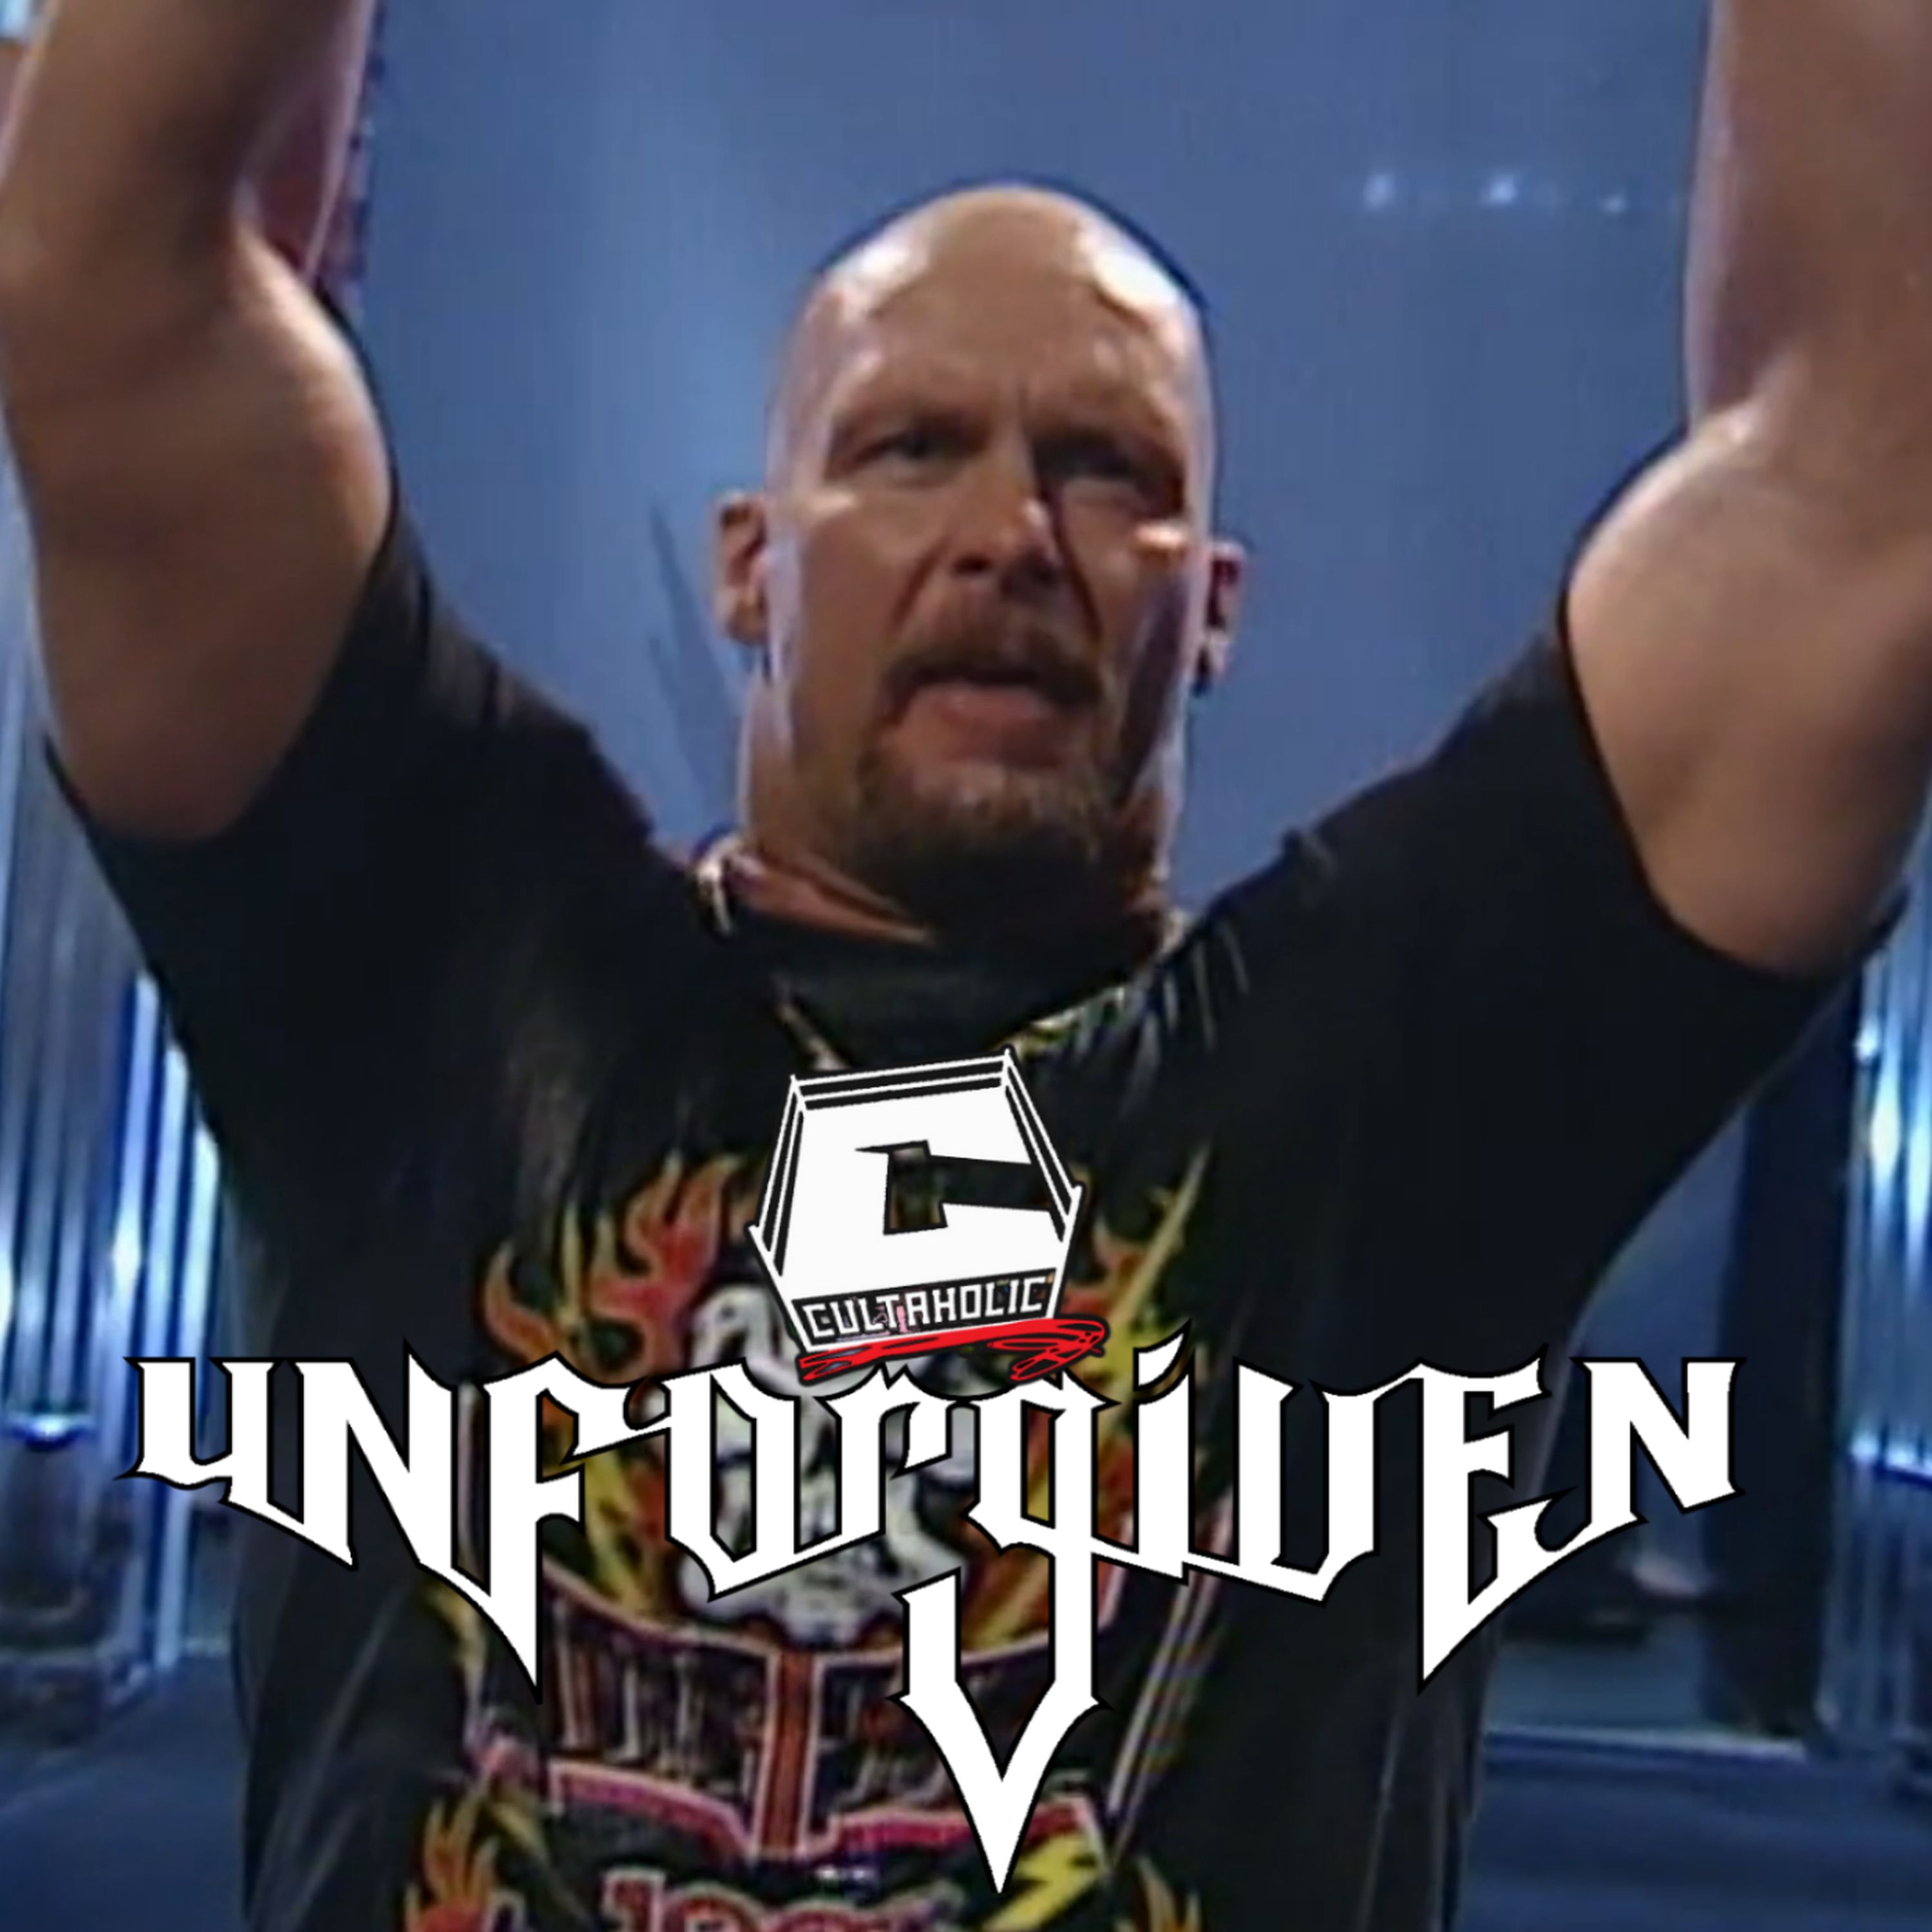 WWF Unforgiven 2000 (Steve Austin Returns, The Rock Vs Undertaker Vs Chris Benoit Vs Kane) | Cultaholic Classic Watchalong